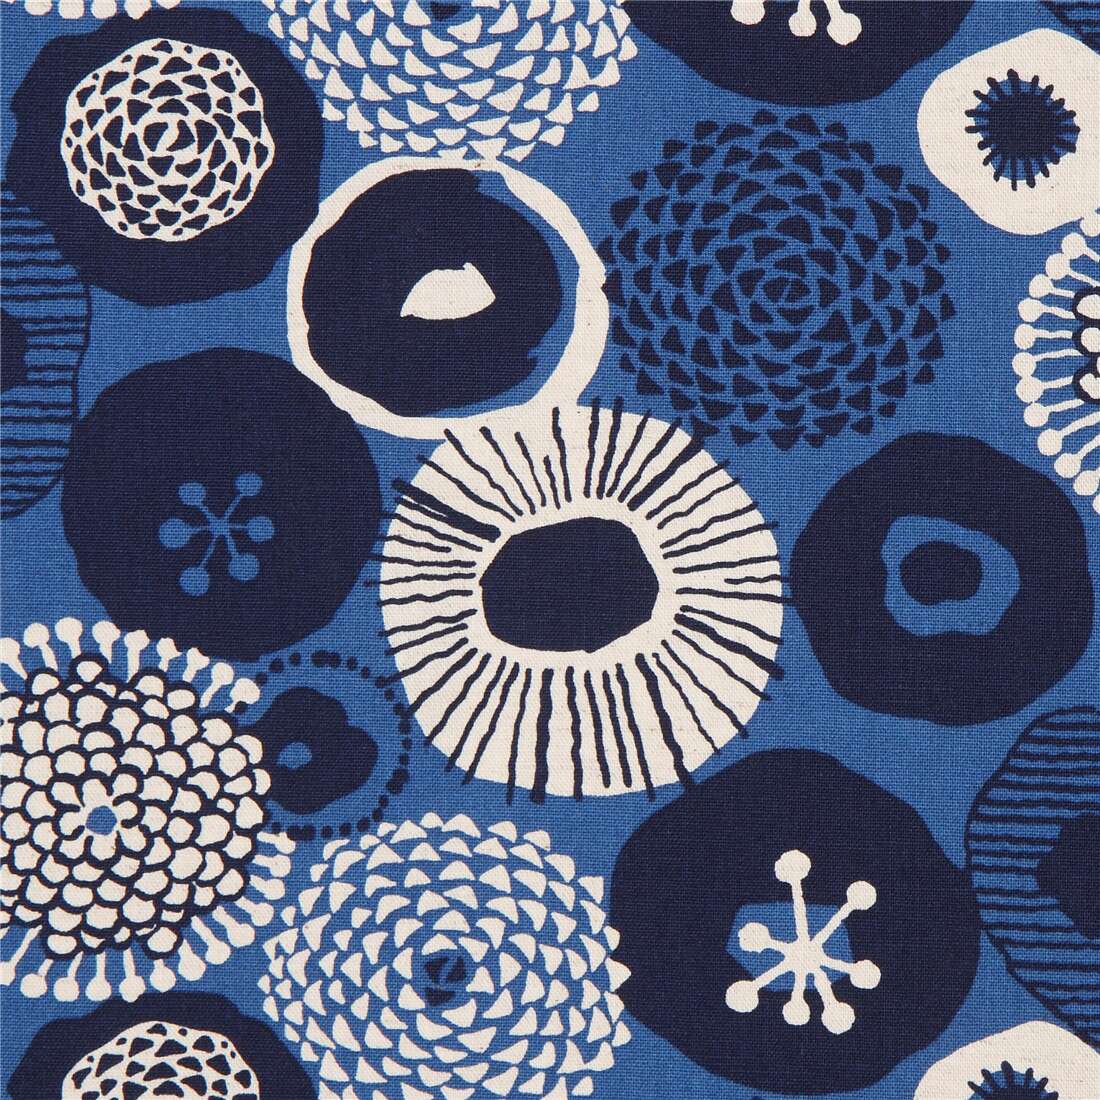 Flowerfield blue 19,90 Eur/Meter Japanese Fabrics Cotton Linen Canvas By the Meter Flowers Tulips Nordic Flower 50 cm x 110 cm Petit Joli